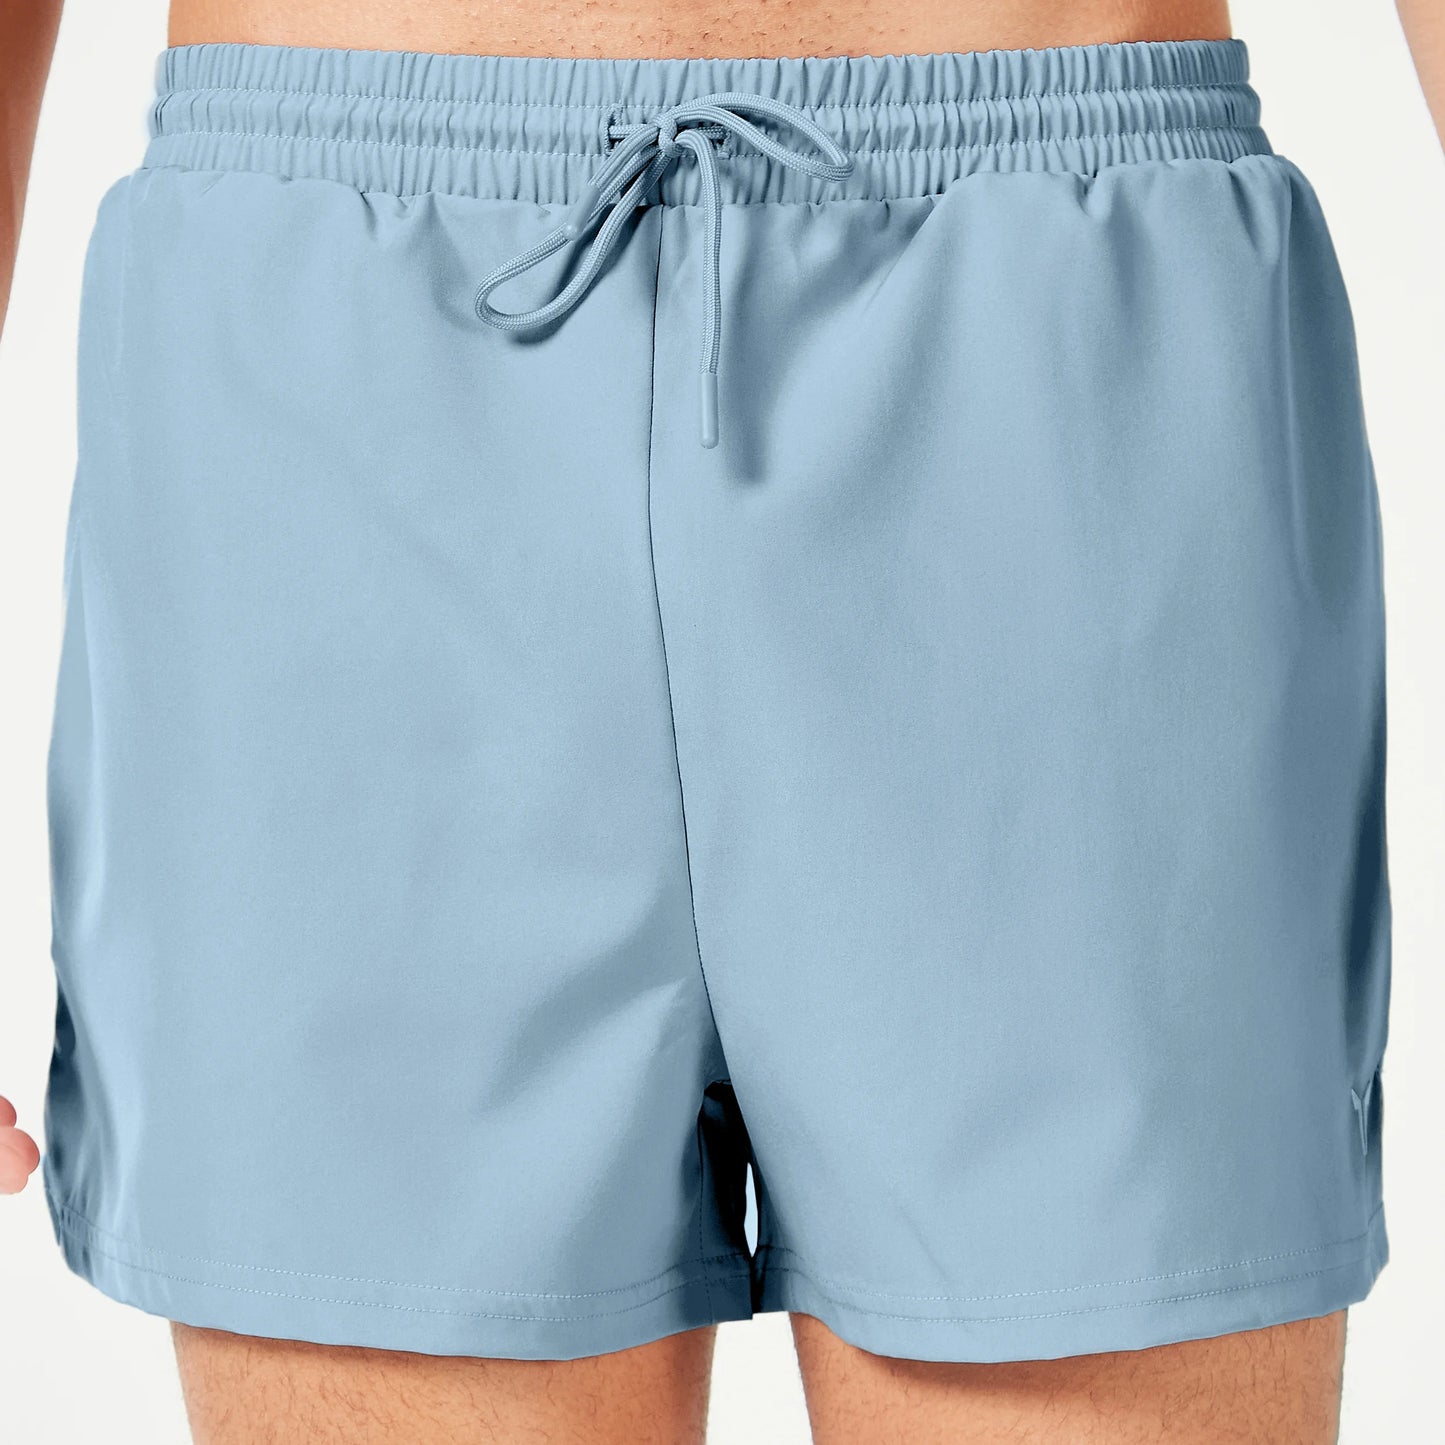 Essential 3" Shorts - Coronet Blue